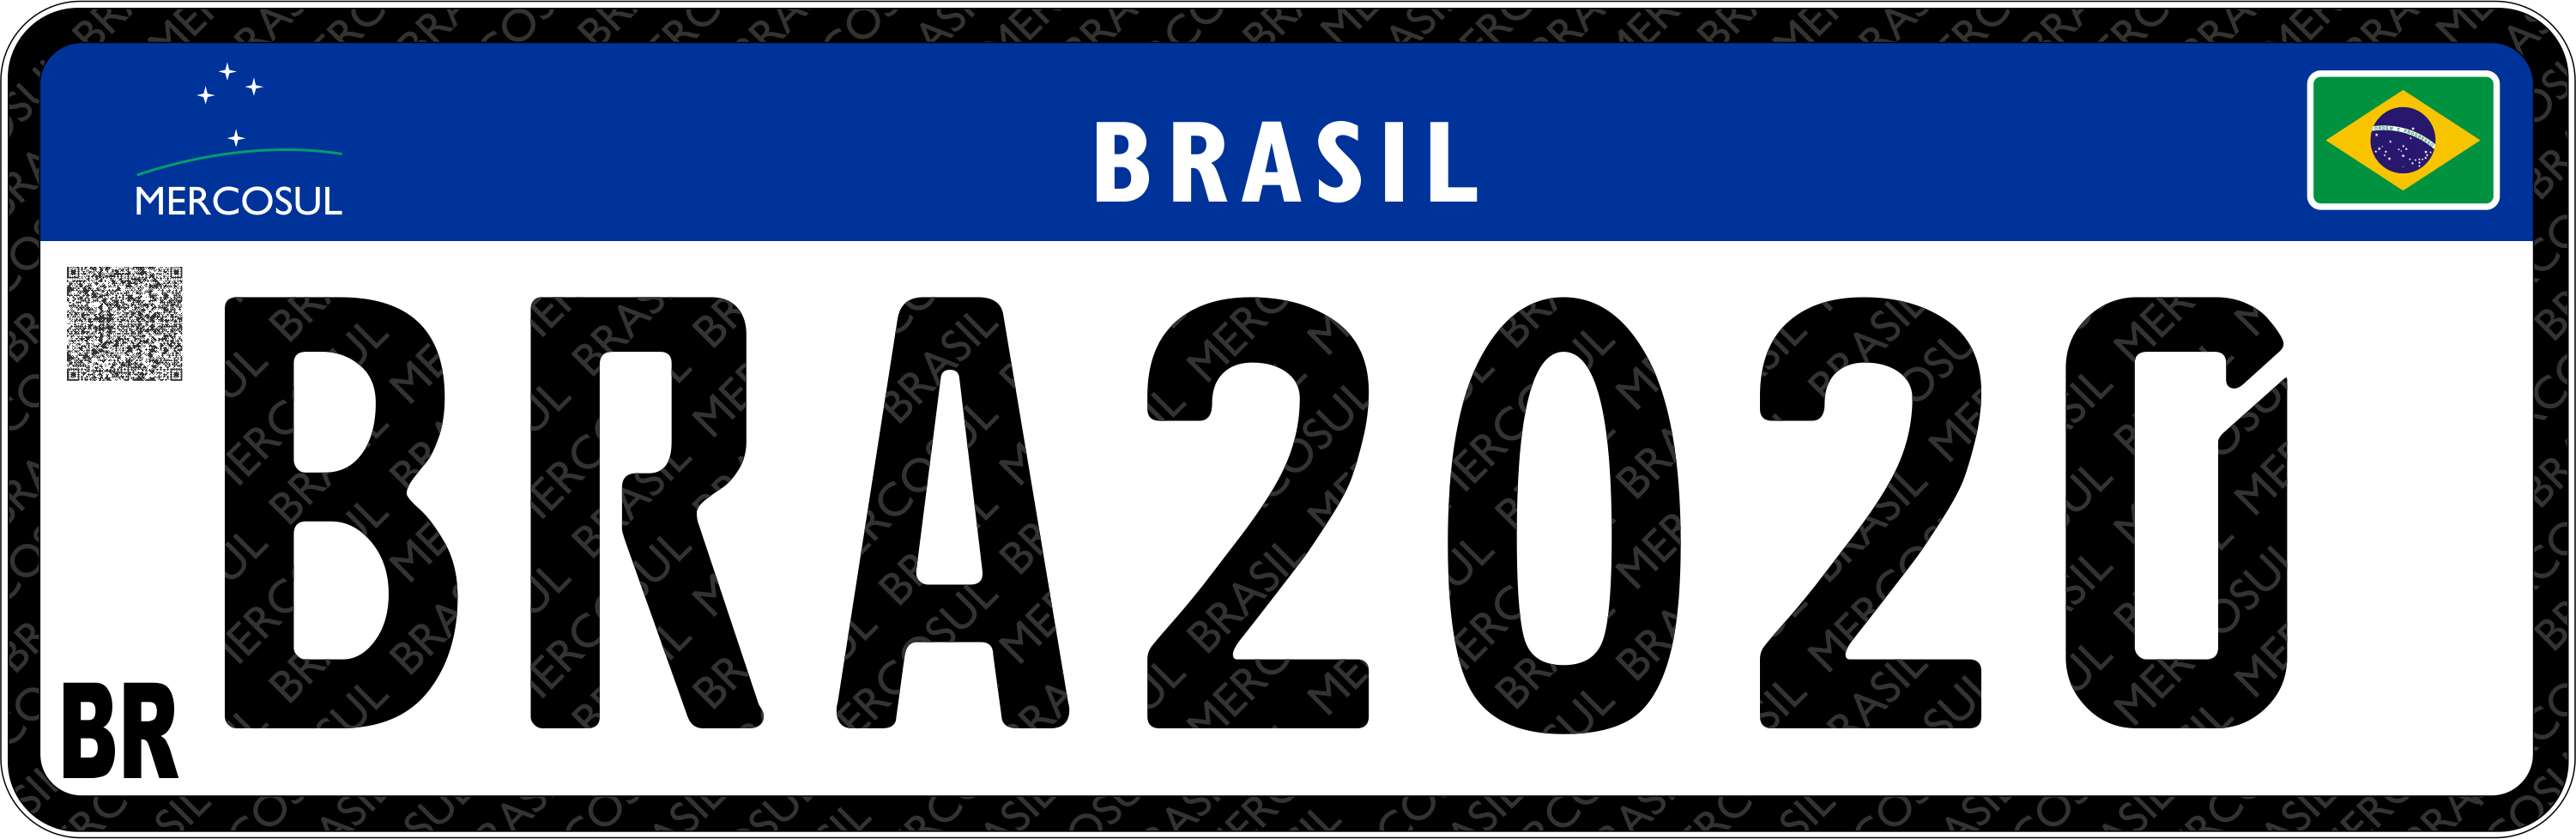 Placa-Mercosul_BRA_sem-difrativo-2020